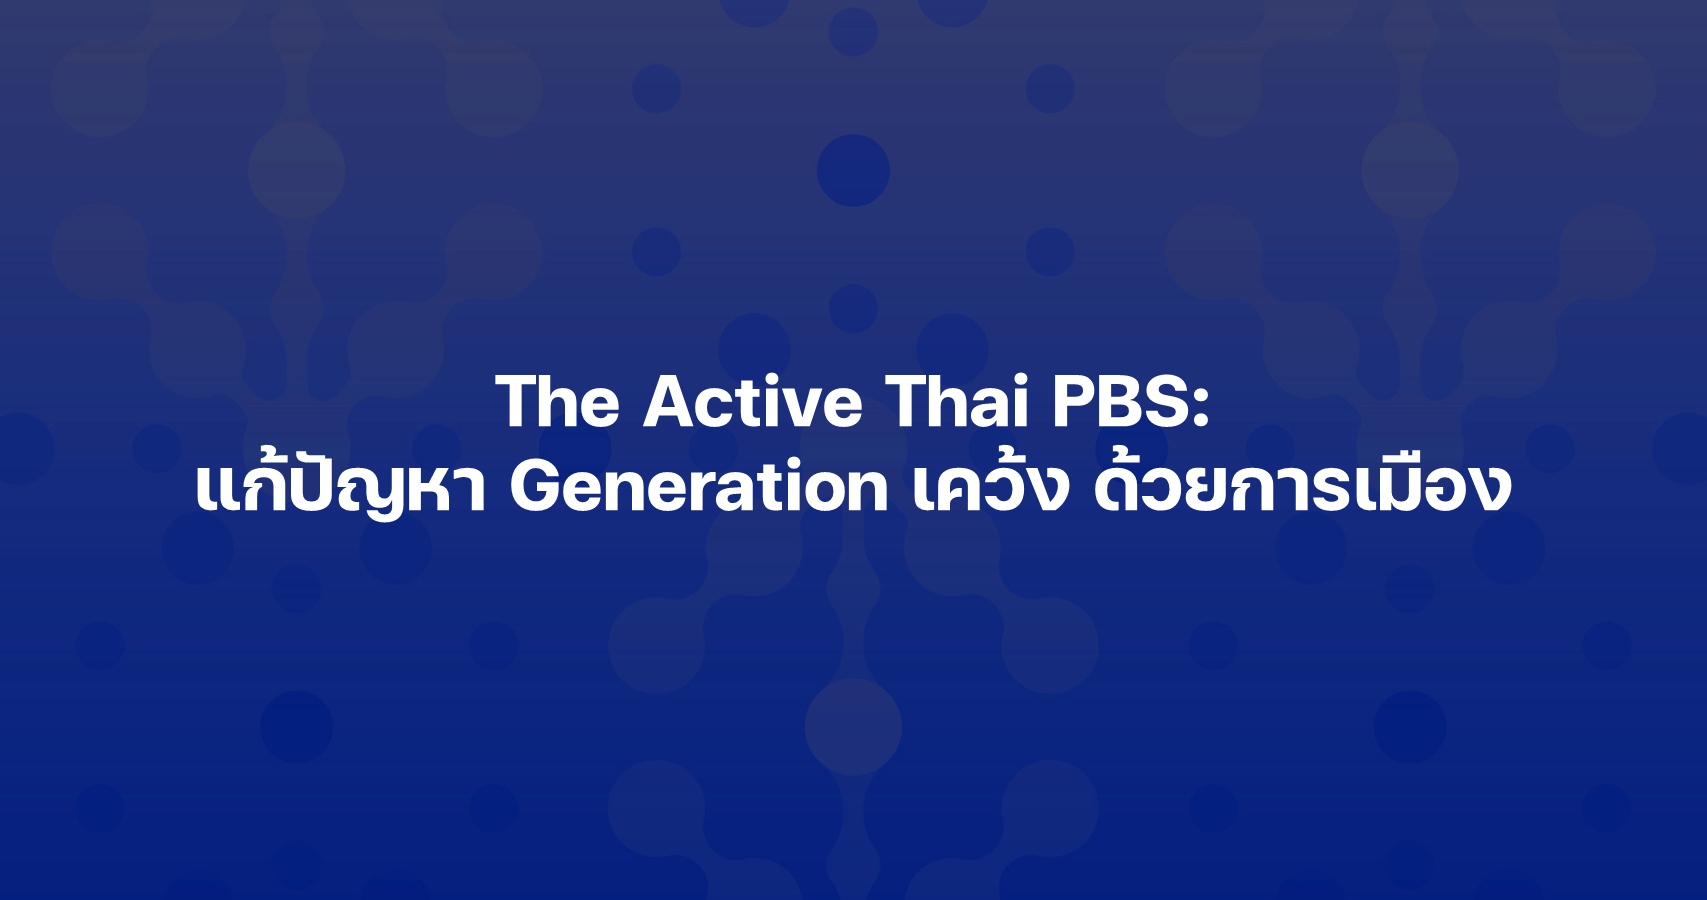 The Active Thai PBS: แก้ปัญหา Generation เคว้ง ด้วยการเมือง